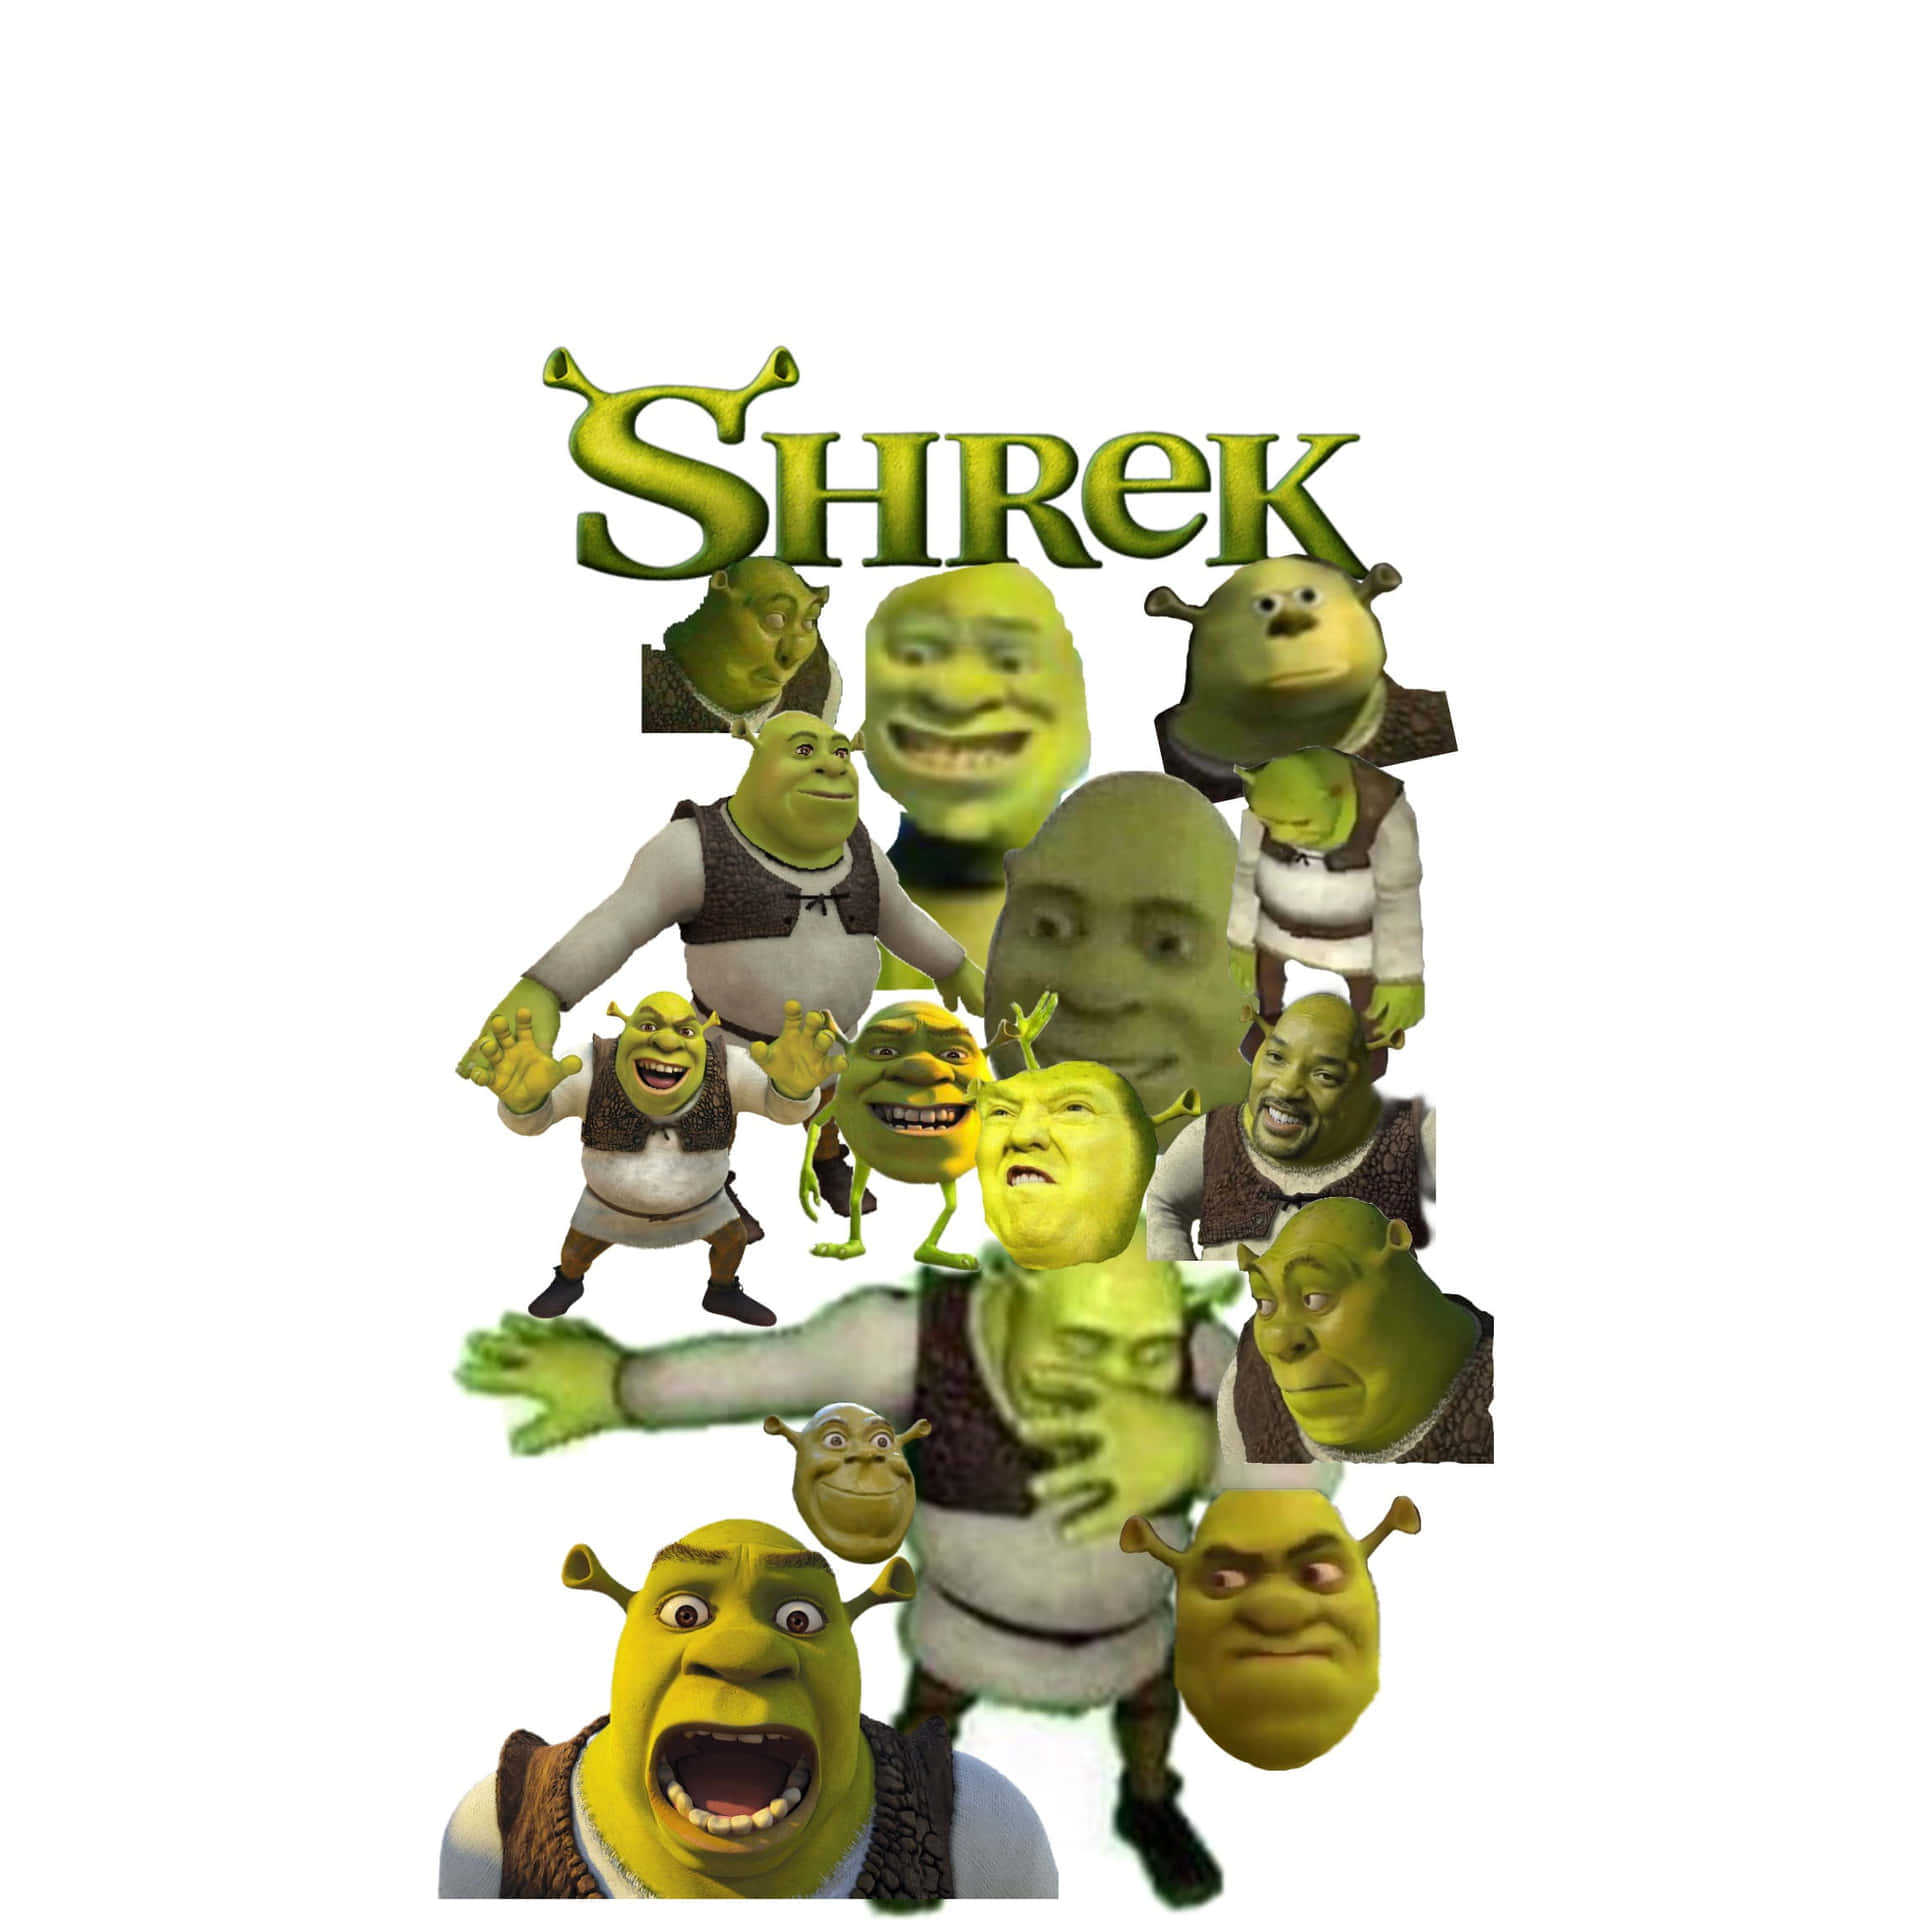 Surreal Shrek Collage Wallpaper